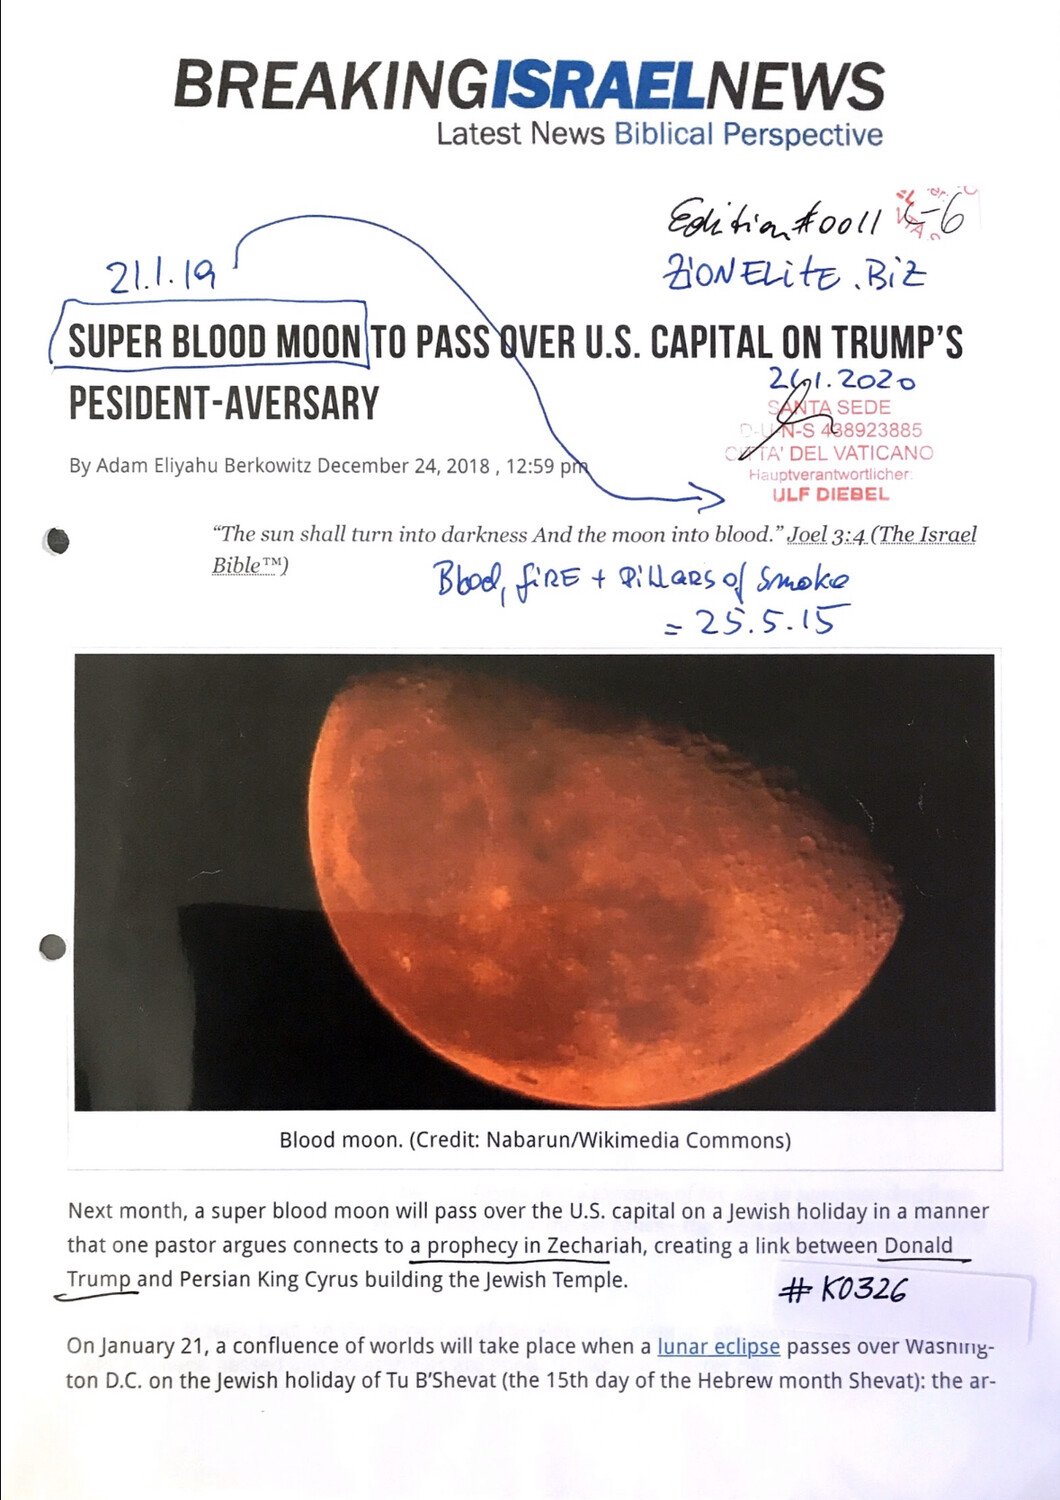 #K0326 l Breaking Israel News - Super Blood Moon to pass over U.S. Capital on Trump’s Pesident-Aversary